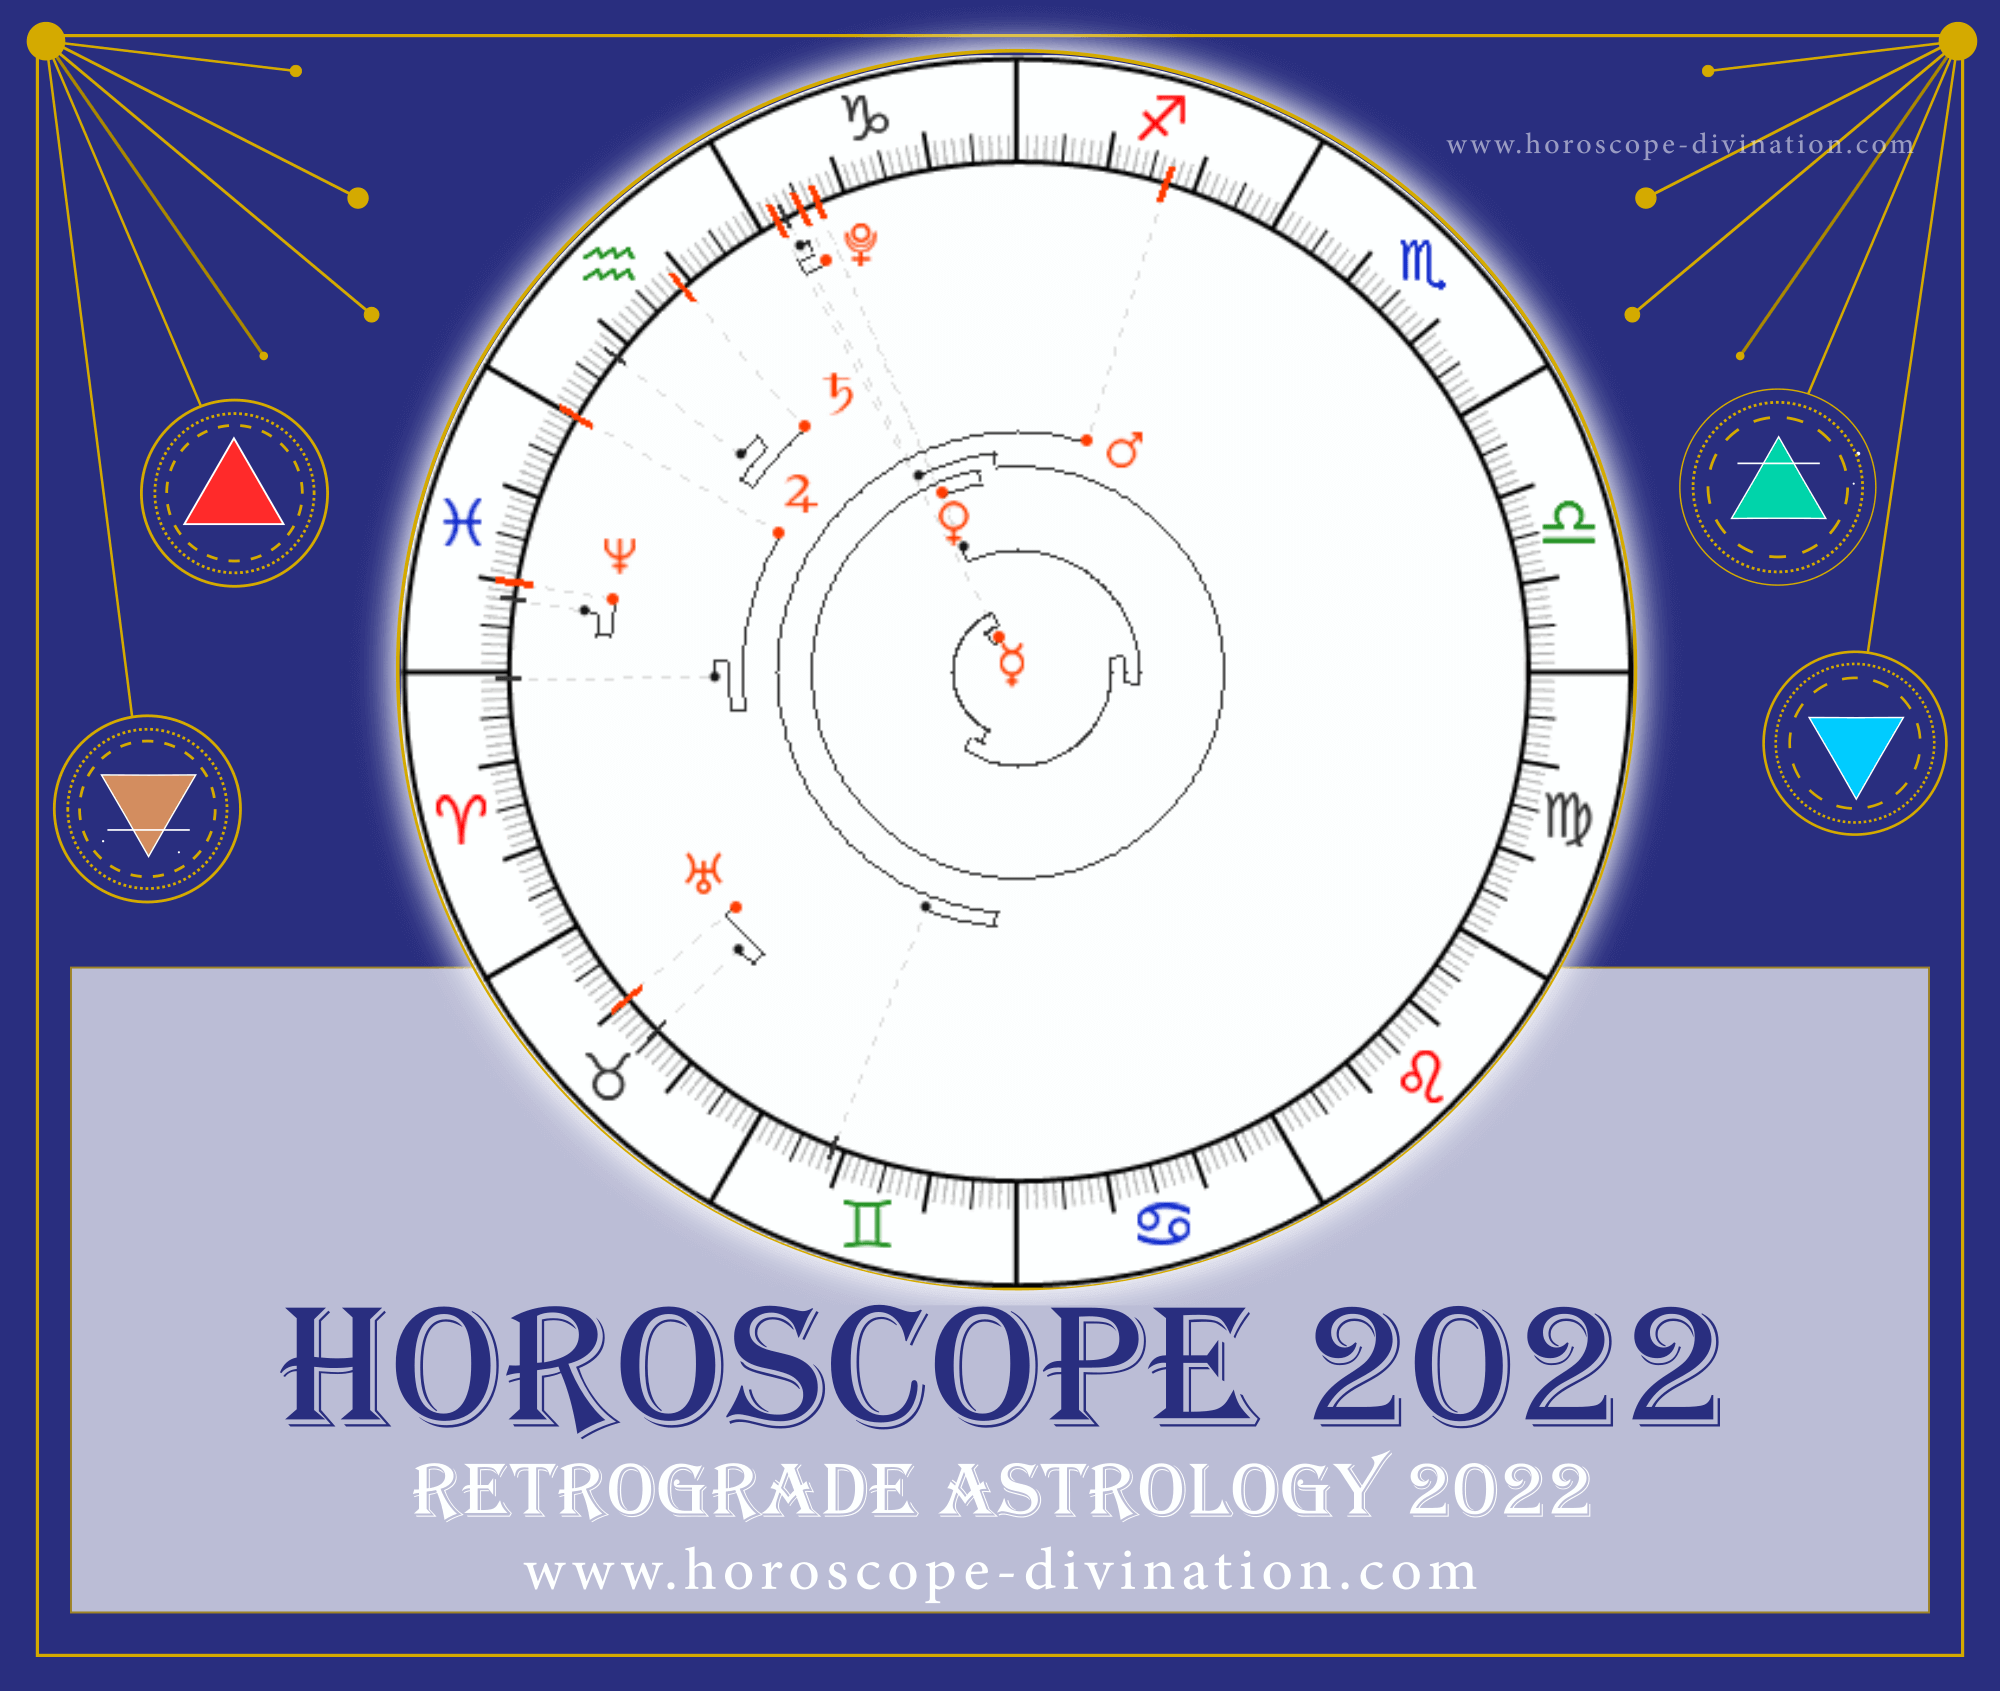 Retrograde Astrology 2022 - graph of Horoscope 2022 Taurus